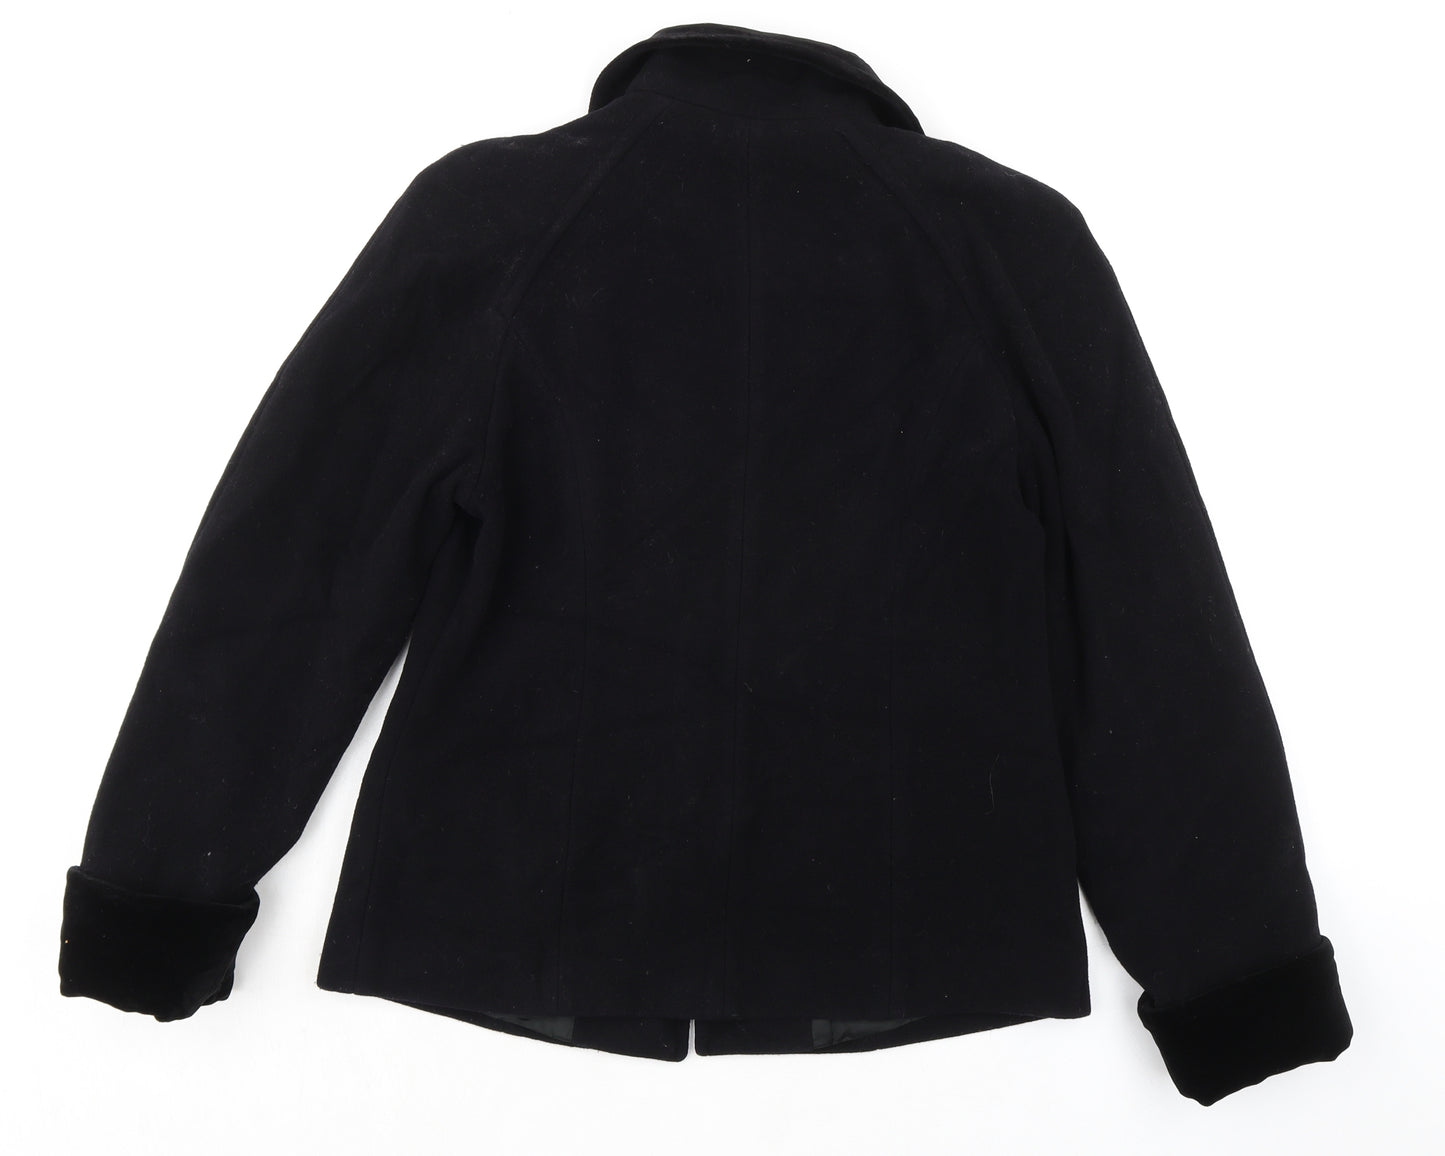 Gina Womens Black Jacket Size 12 Button